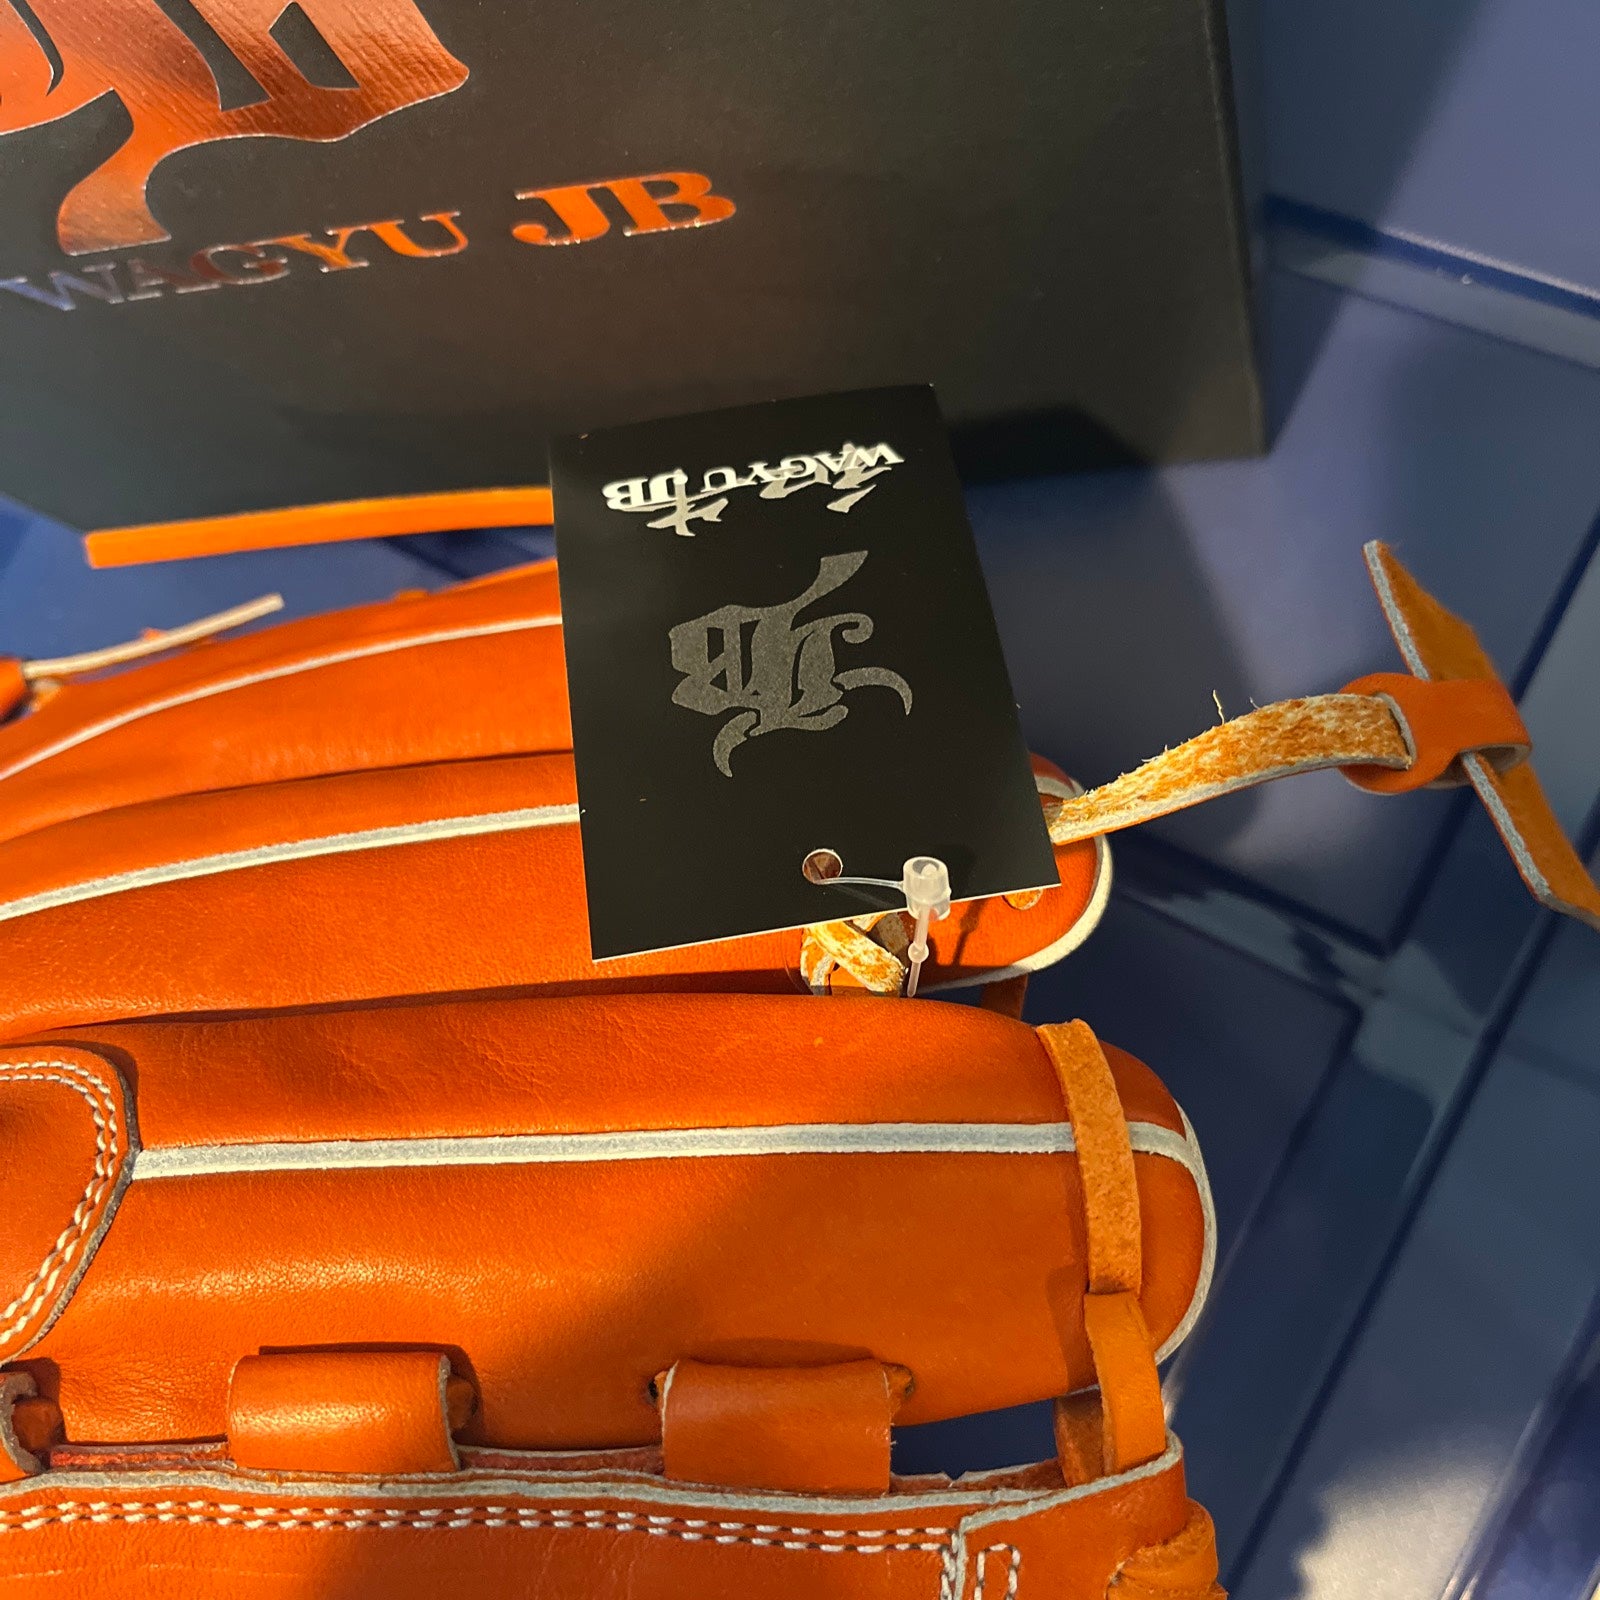 NEW IN BOX Wagyu JB Pitcher Glove + Carry Bag: 11.5 JB-001Y Orange Trevor  Bauer Made in Japan